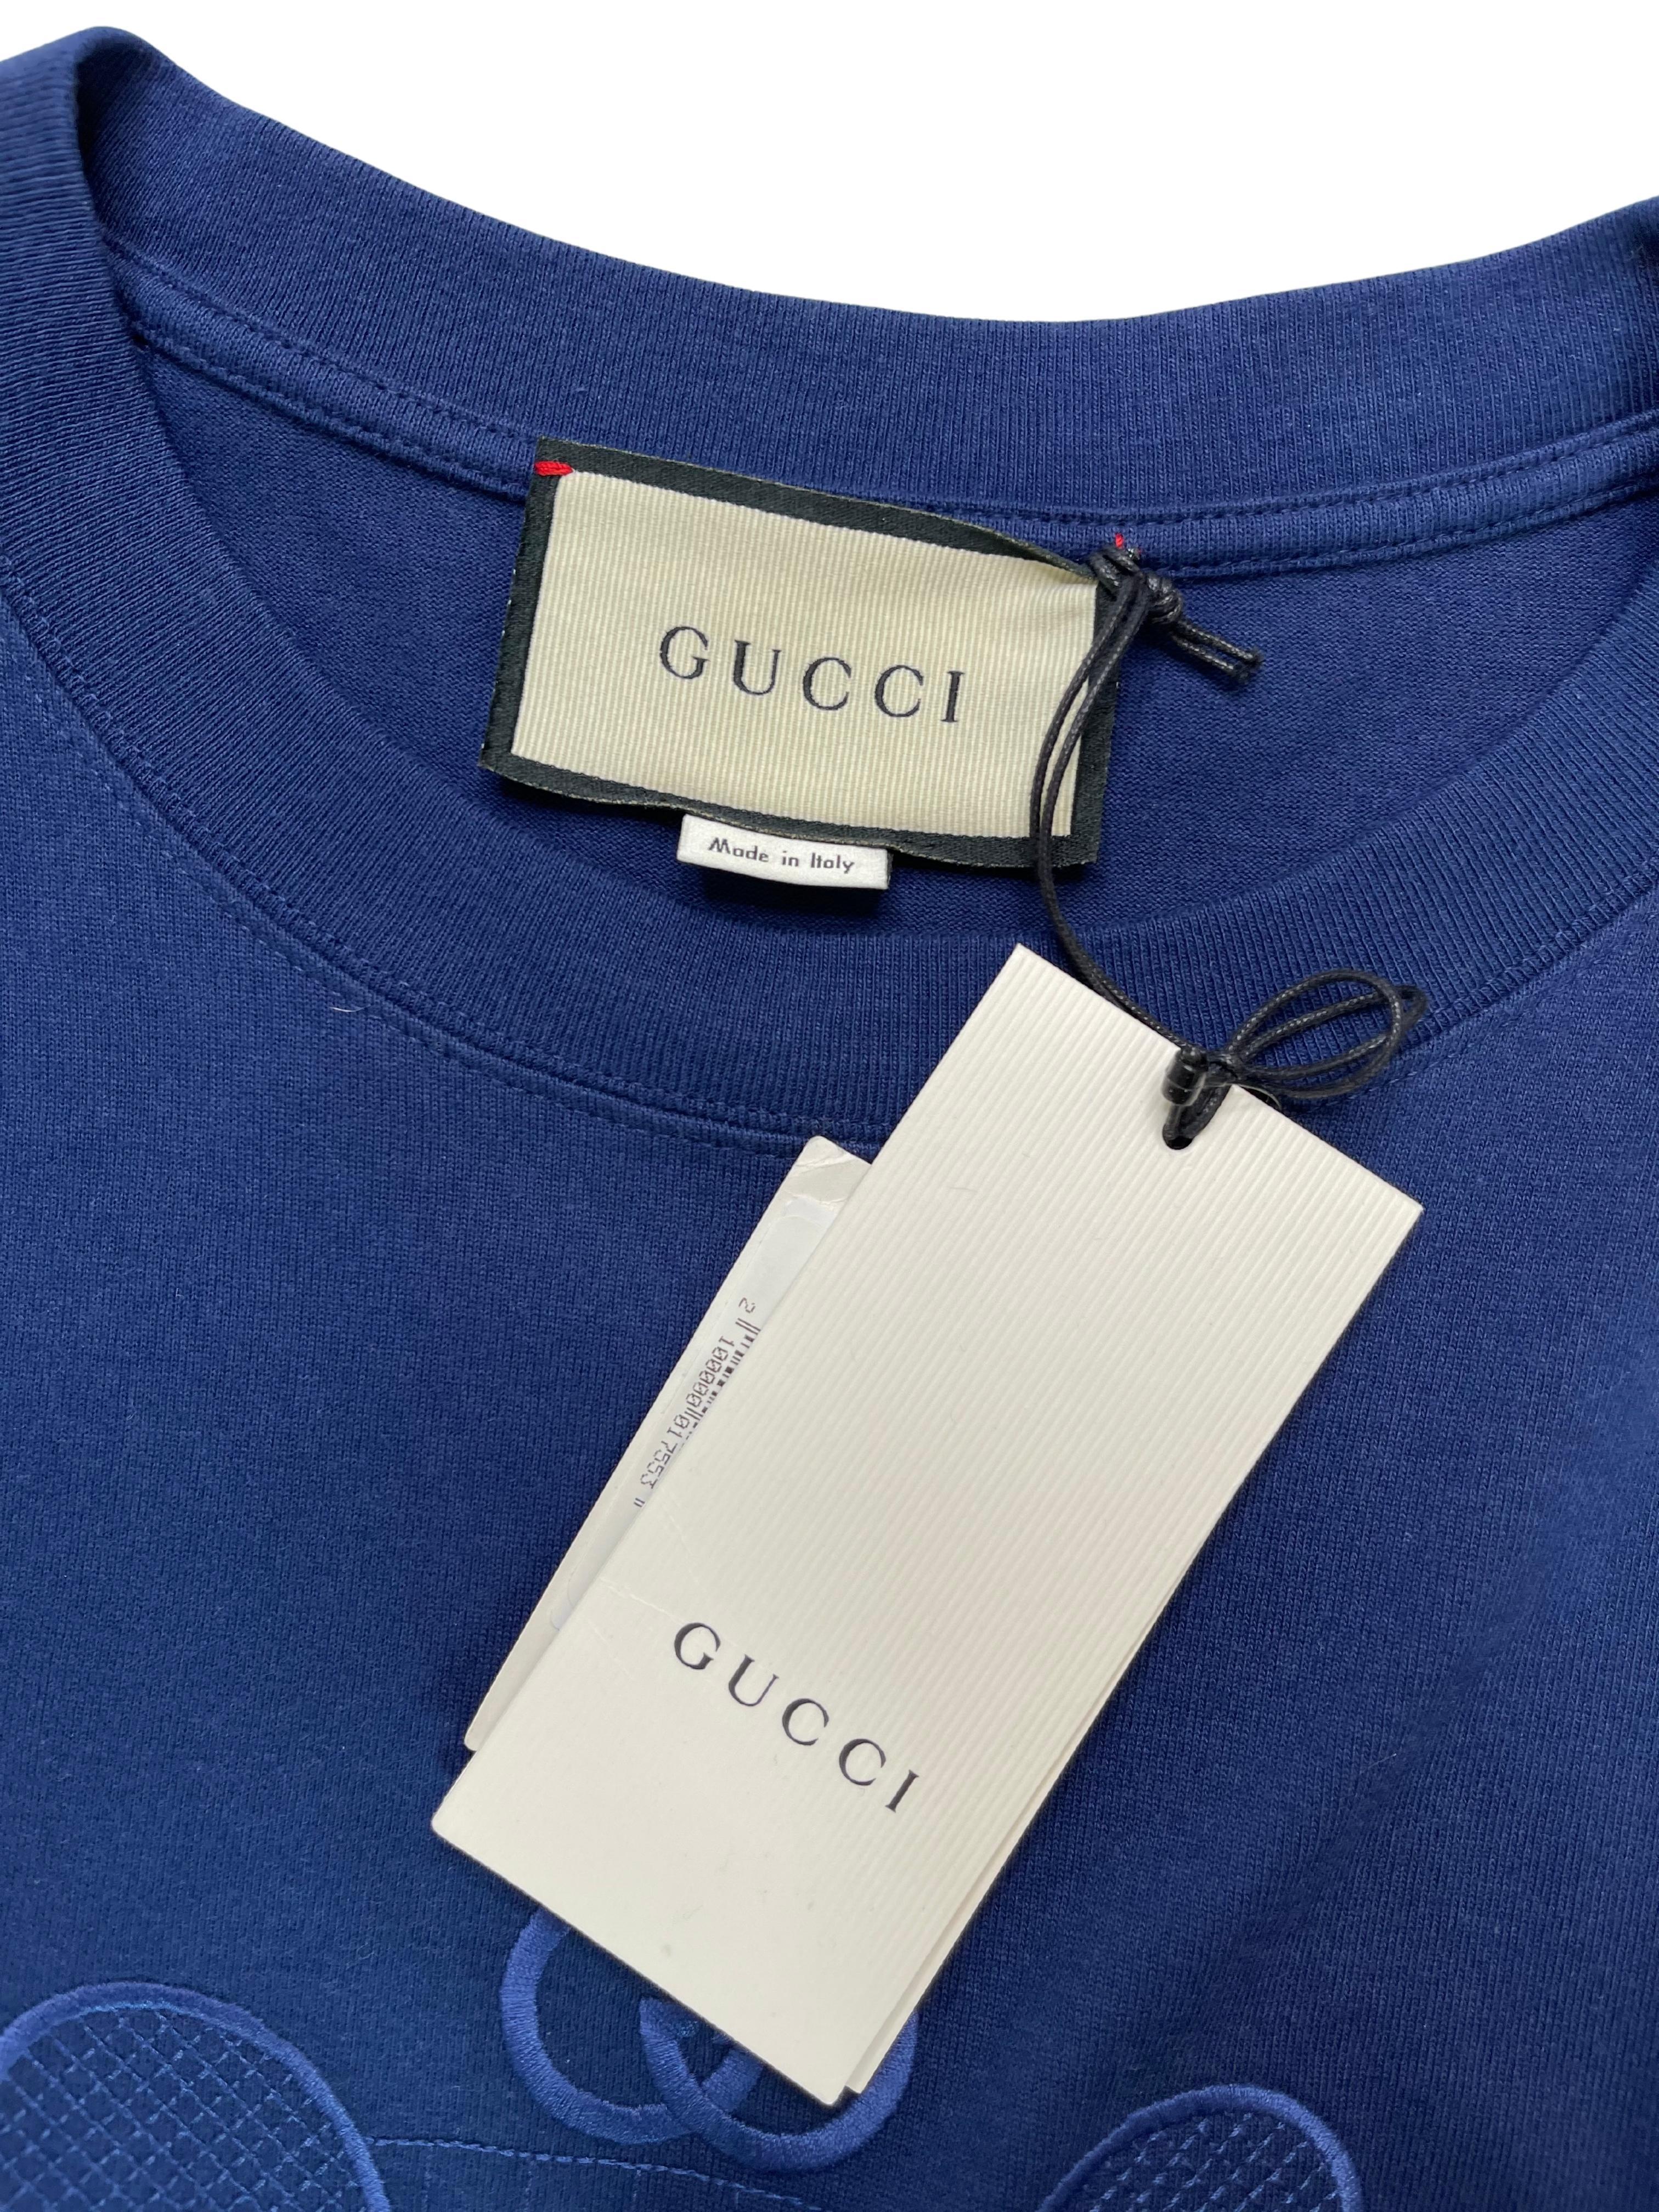 Black Gucci Blue Cotton Tennis Sweatshirt 2019 (Small) 581903 For Sale